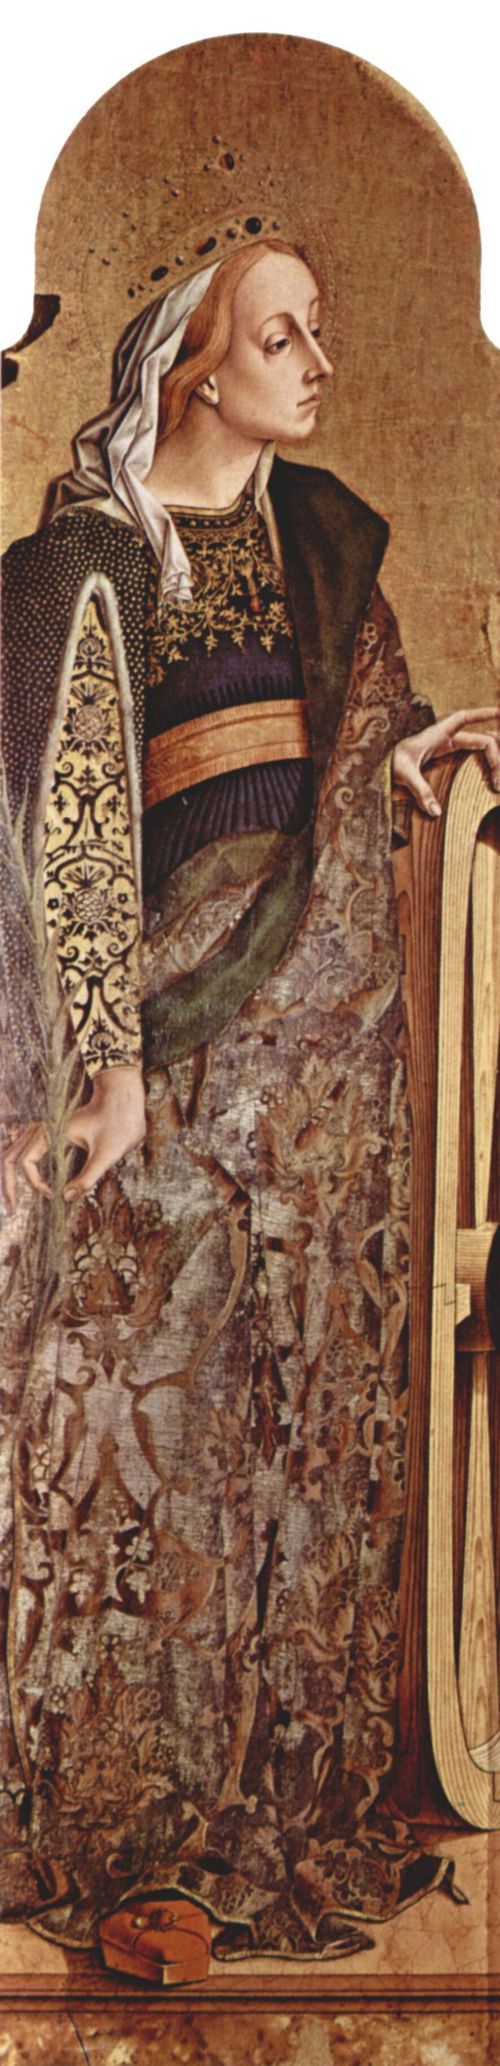 Crivelli, Carlo: Altarpolyptychon von San Francesco in Montefiore dell' Aso, linke uere Tafel: Hl. Katharina von Alexandrien